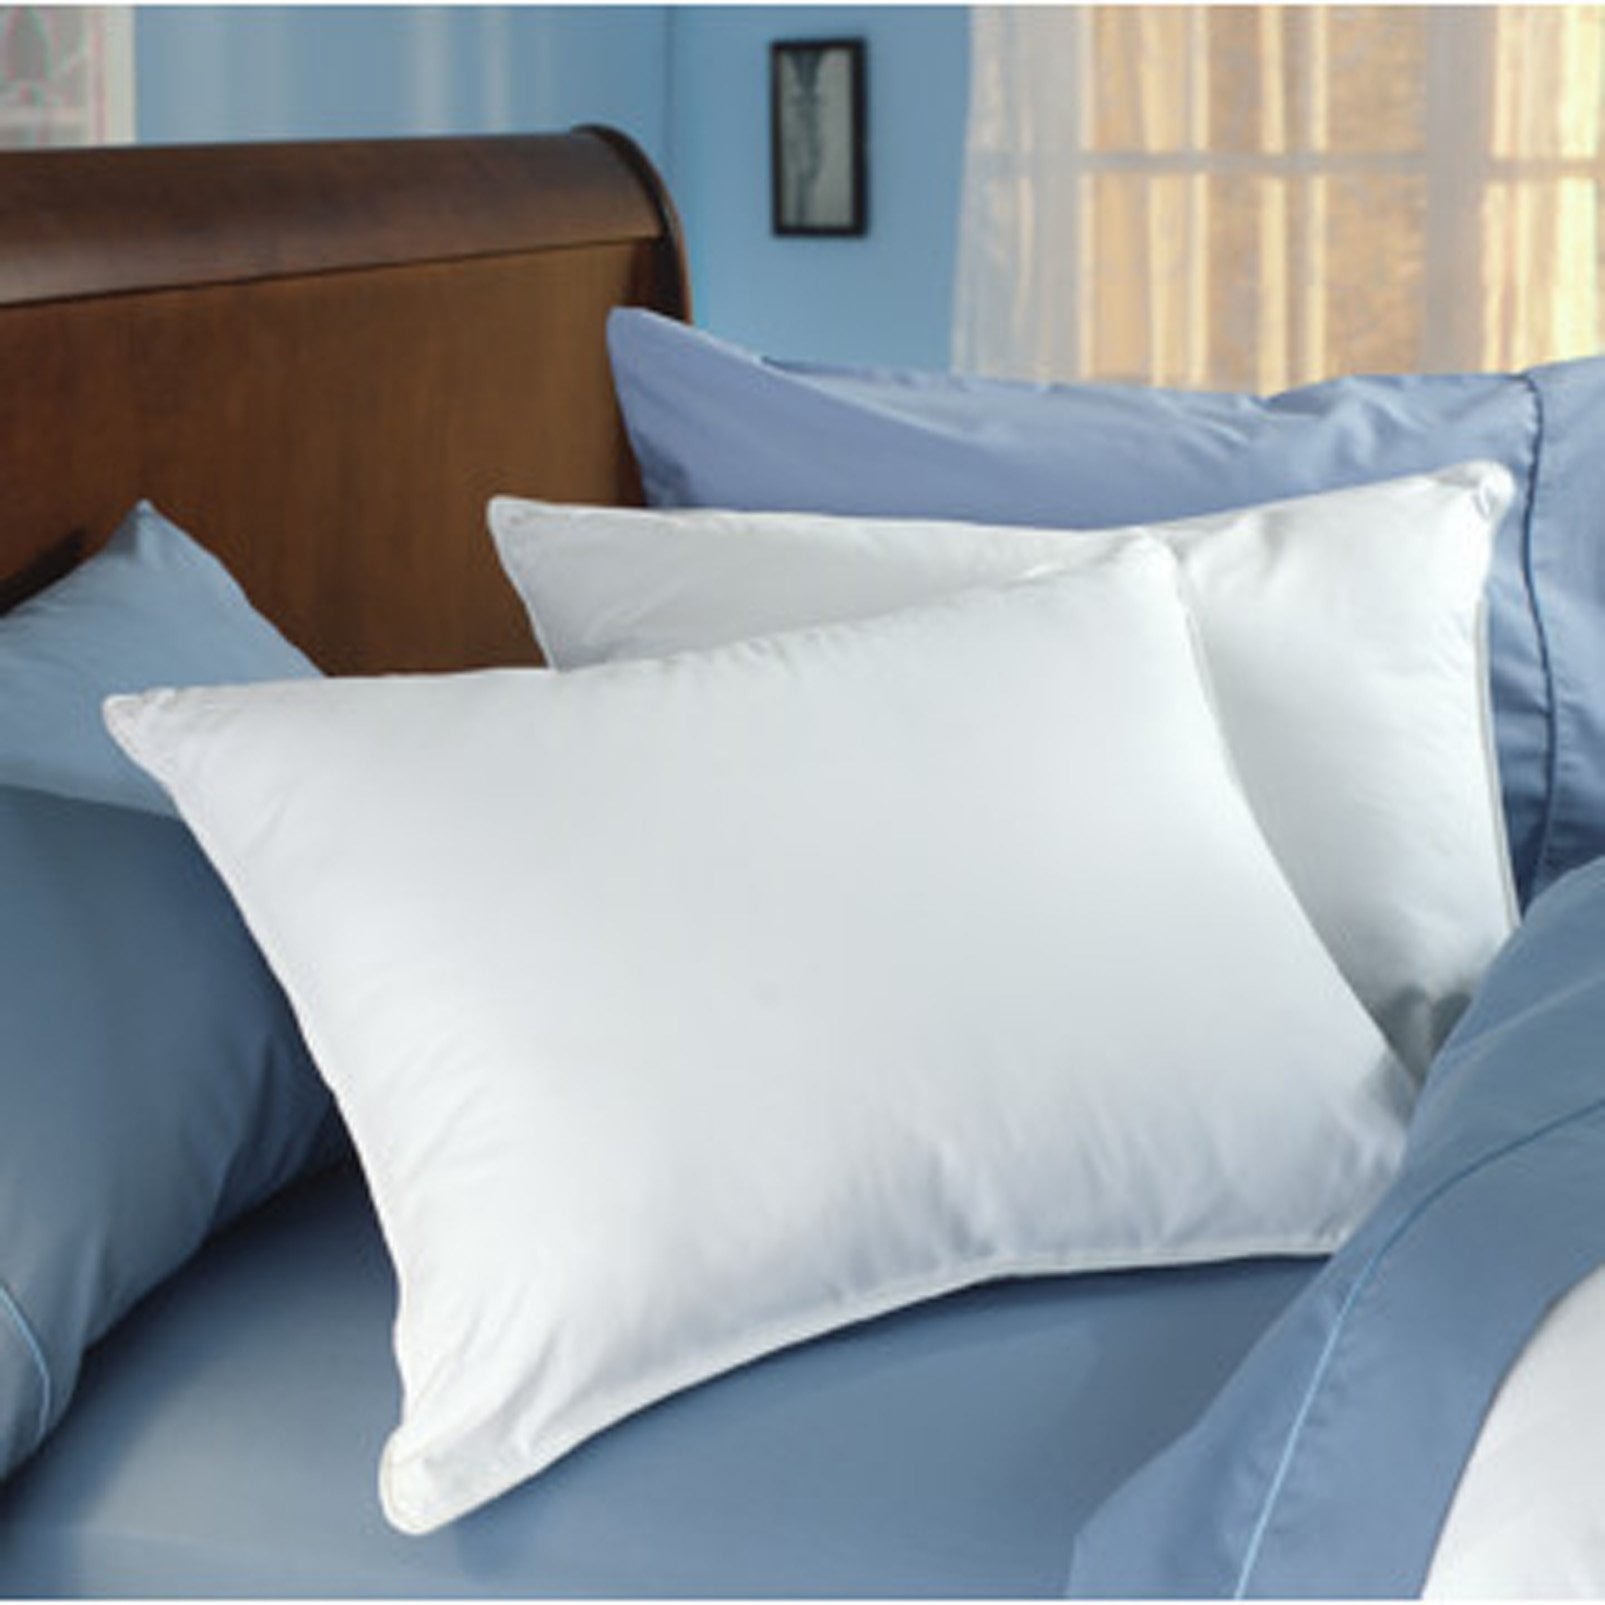 Envirosleep Dream Surrender Set of 2 Standard Pillows Found at Marriott Hotels 